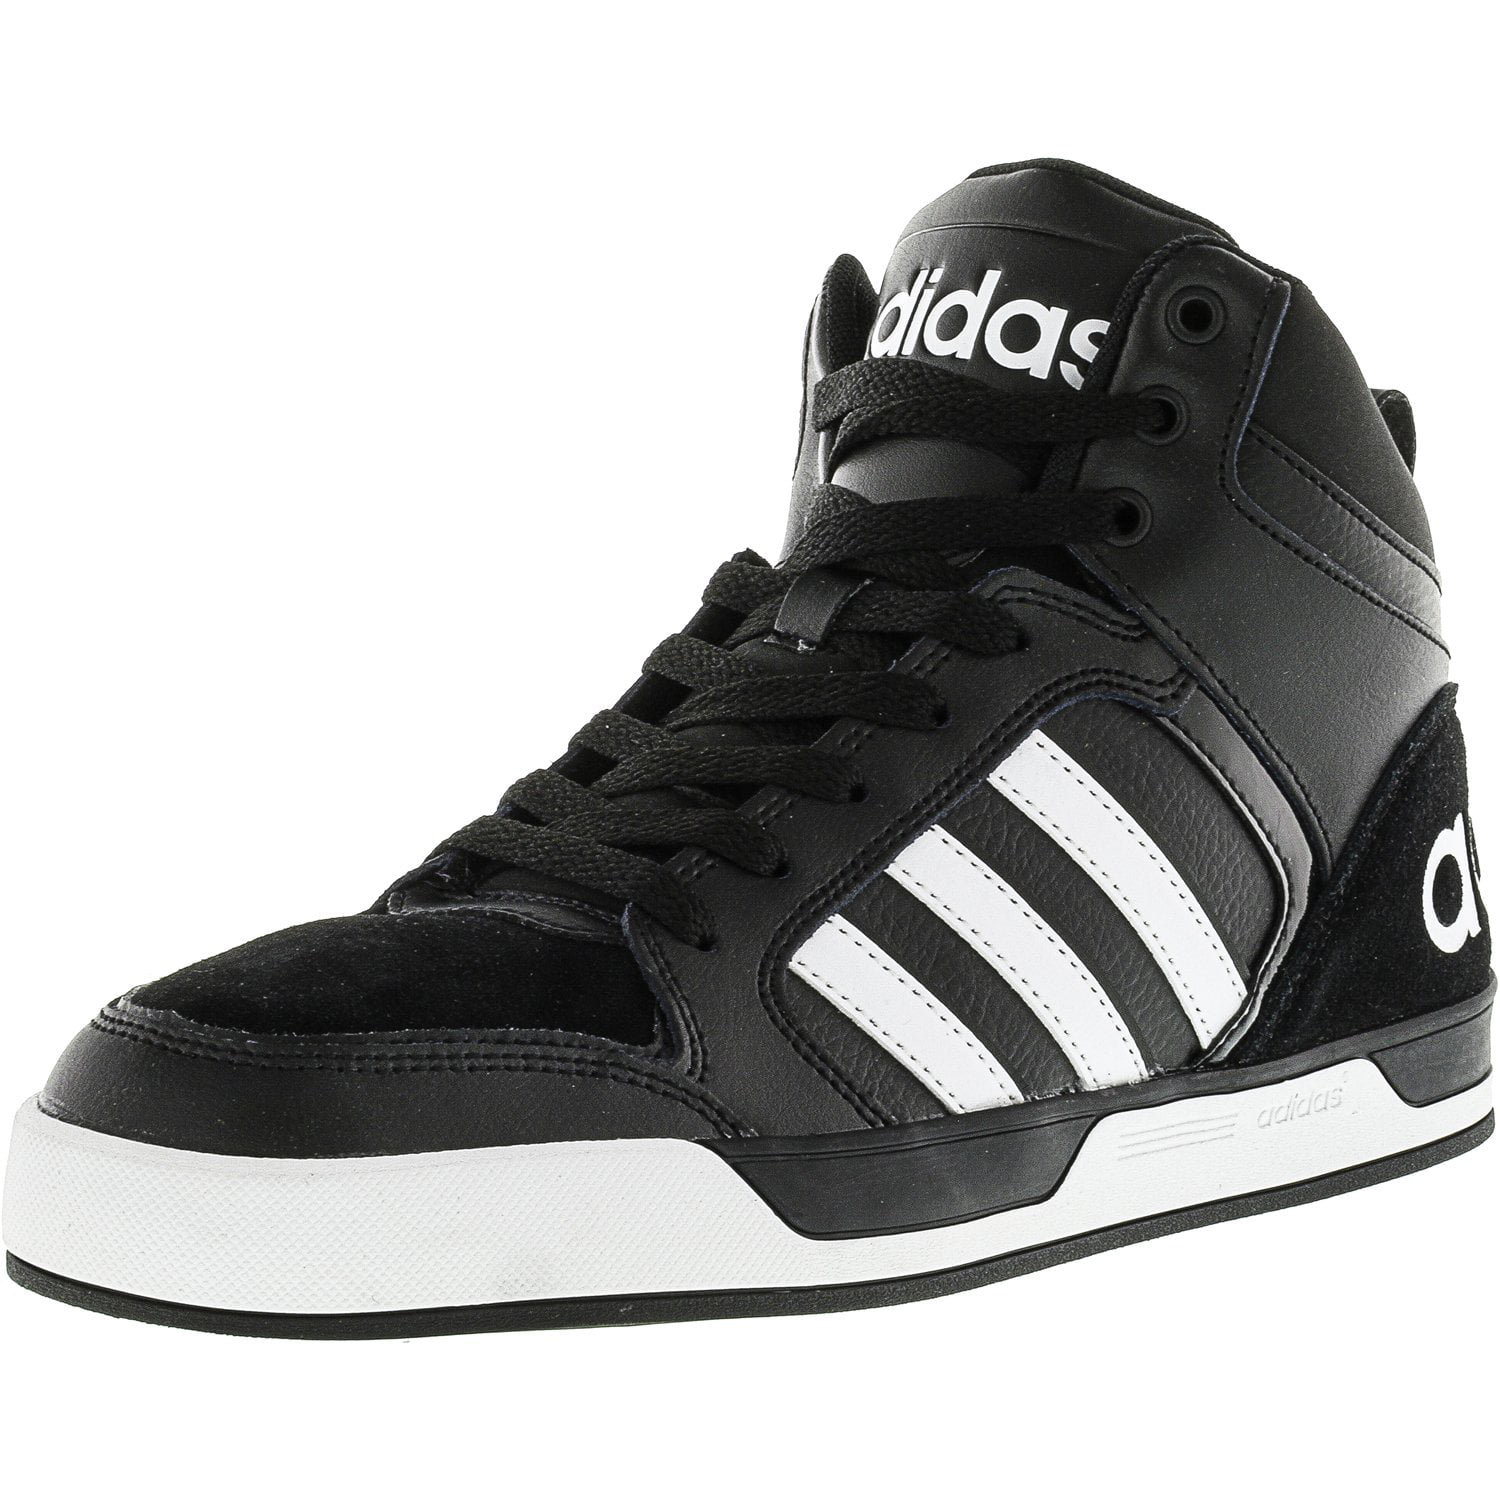 adidas - Adidas Men's Raleigh 9Tis Mid Core Black / White High-Top